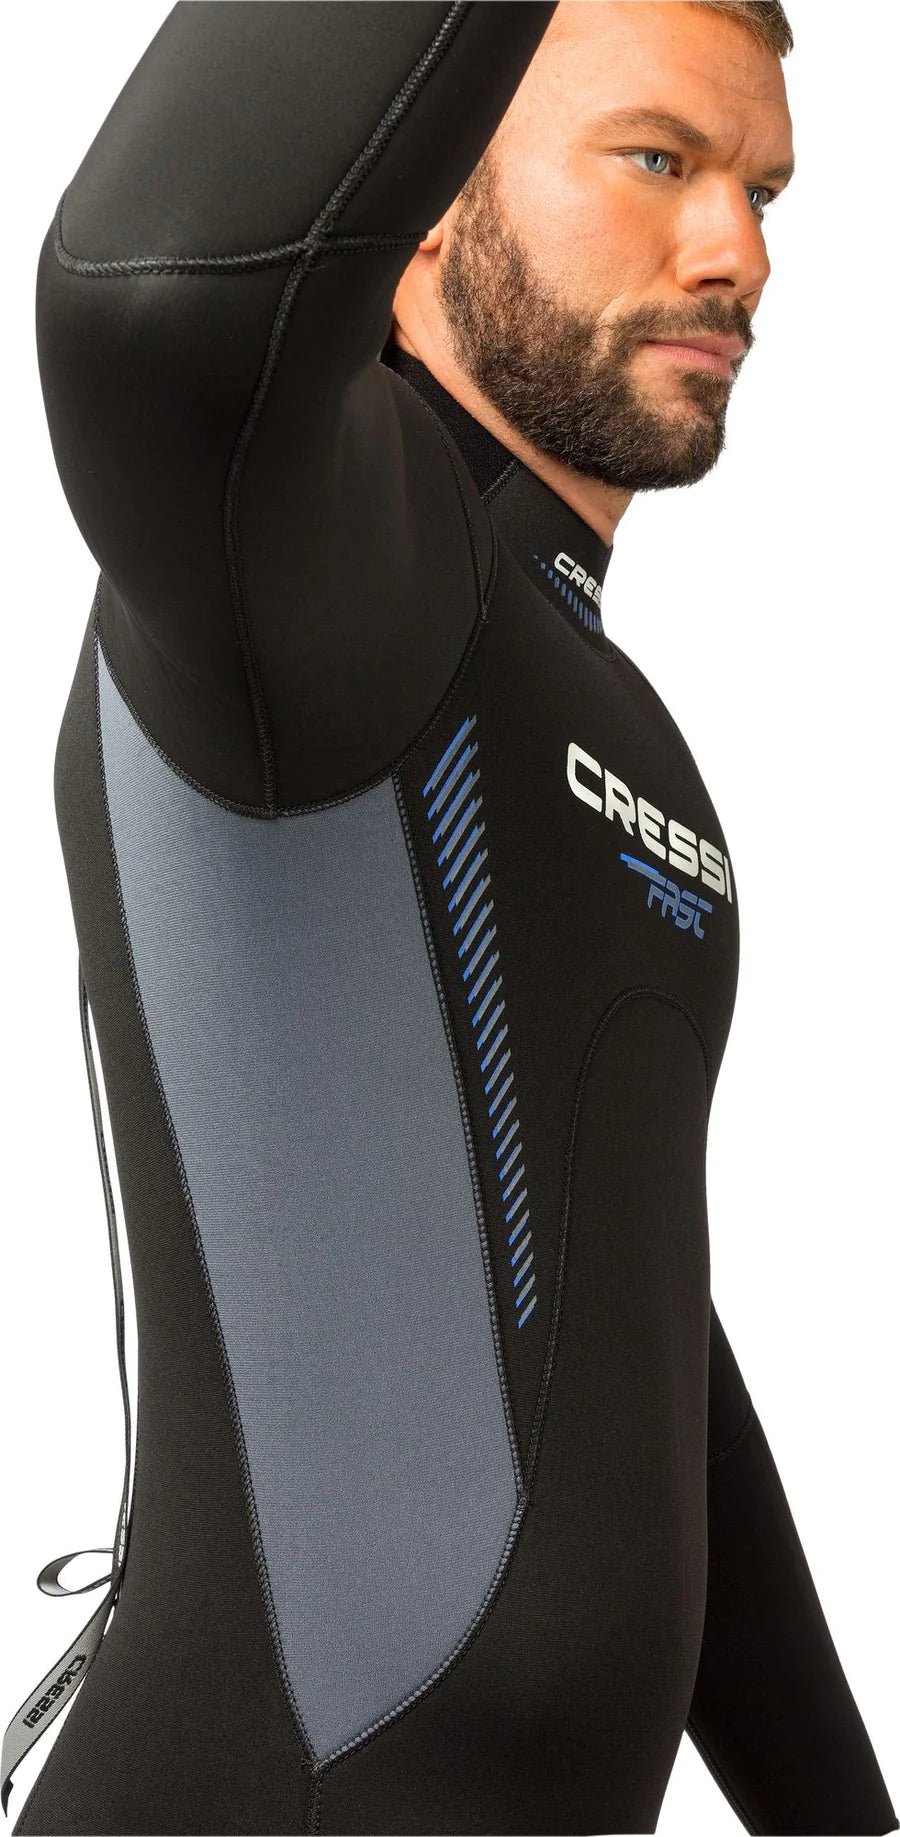 Cressi Fast Onepiece Wetsuit